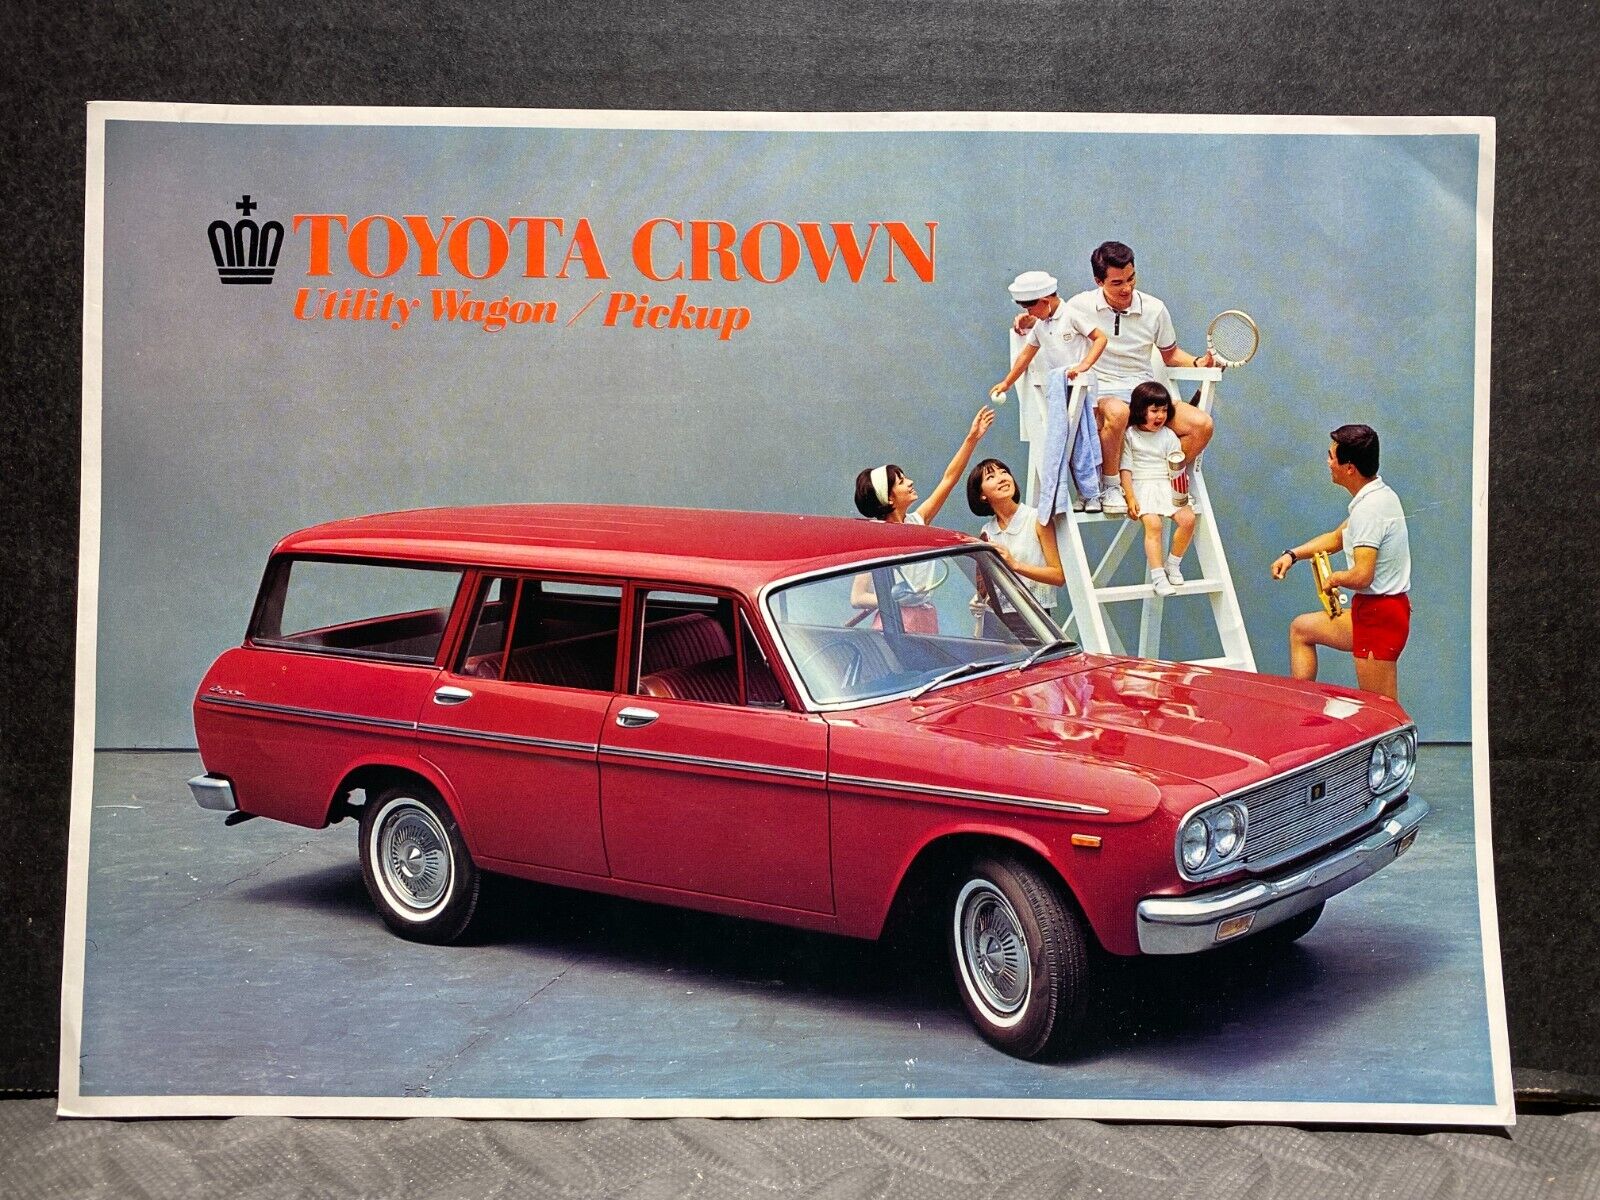 ORIGINAL CAR DEALER BROCHURE VINTAGE 1966 TOYOTA CROWN UTILITY WAGON & PICKUP